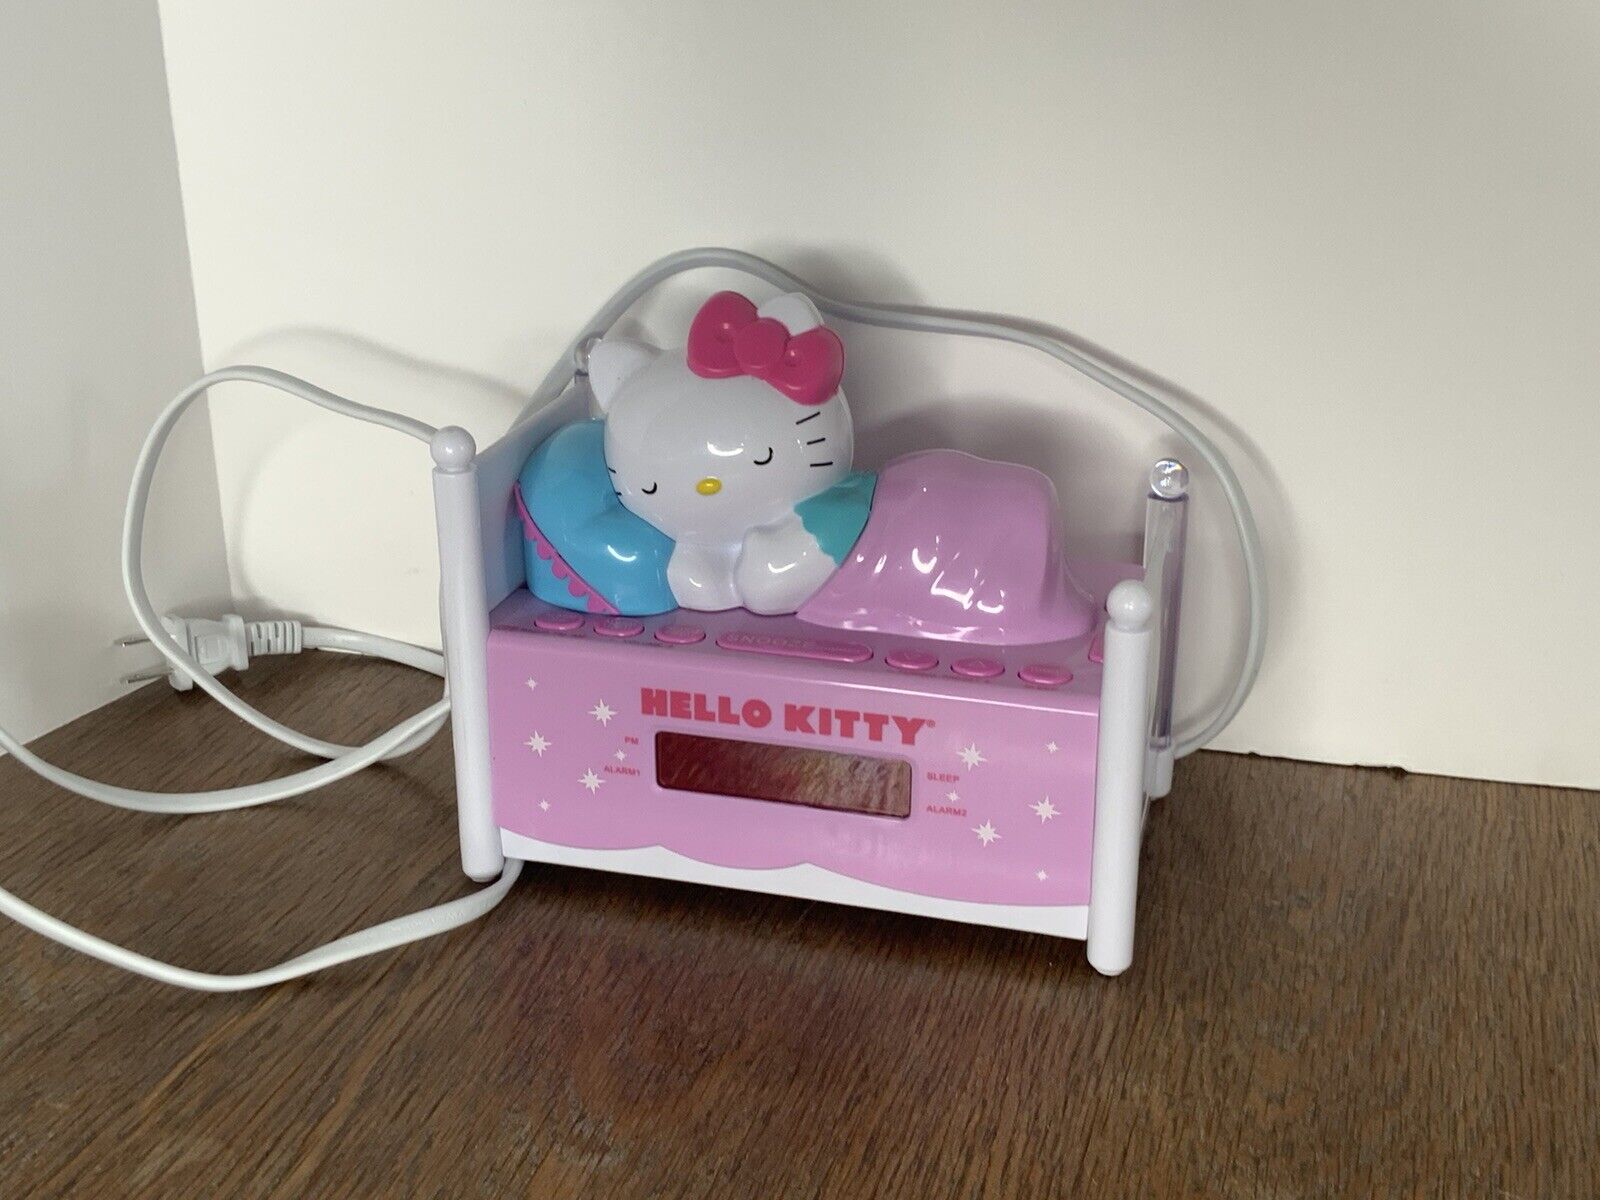 Sanrio Hello Kitty Pink Alarm Clock AM/FM Clock Radio Lights Up